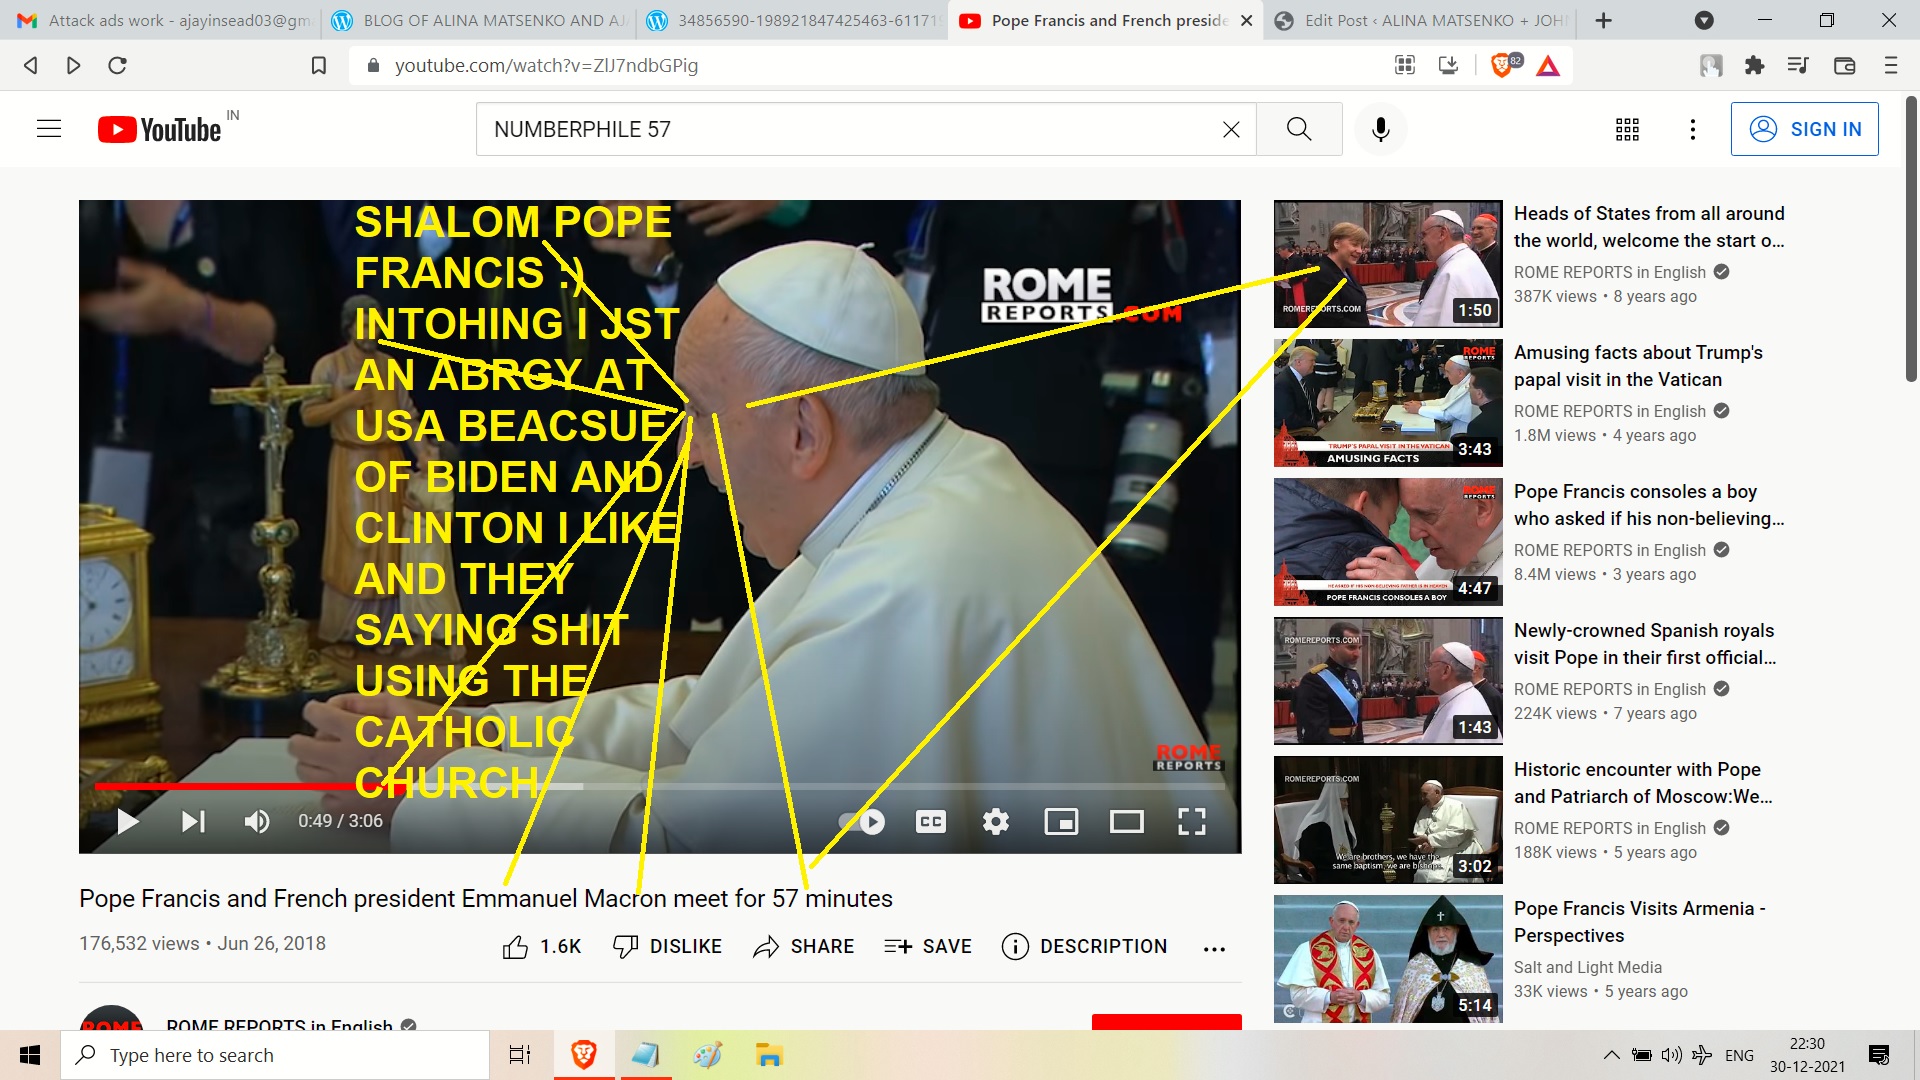 POPE FRANCIS EMAMANU L MACRON AJAY MISHAR BIL CLINTON AND JOE BDIEN NUEBR 57 AND 58 AND WHO